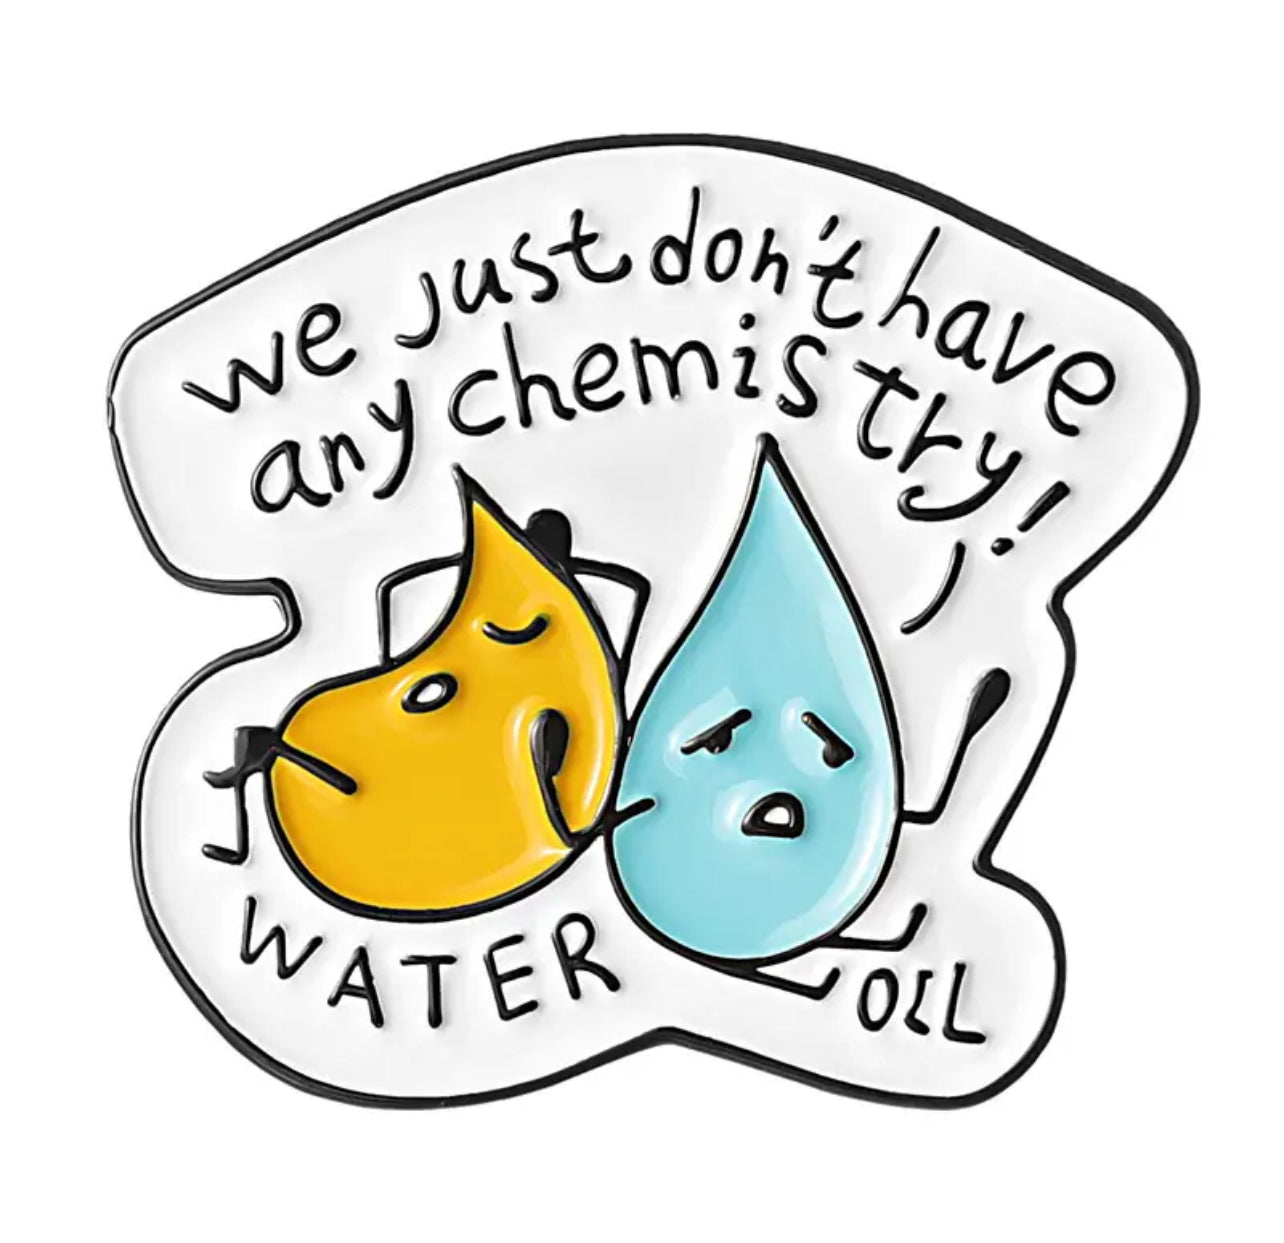 Water & oil